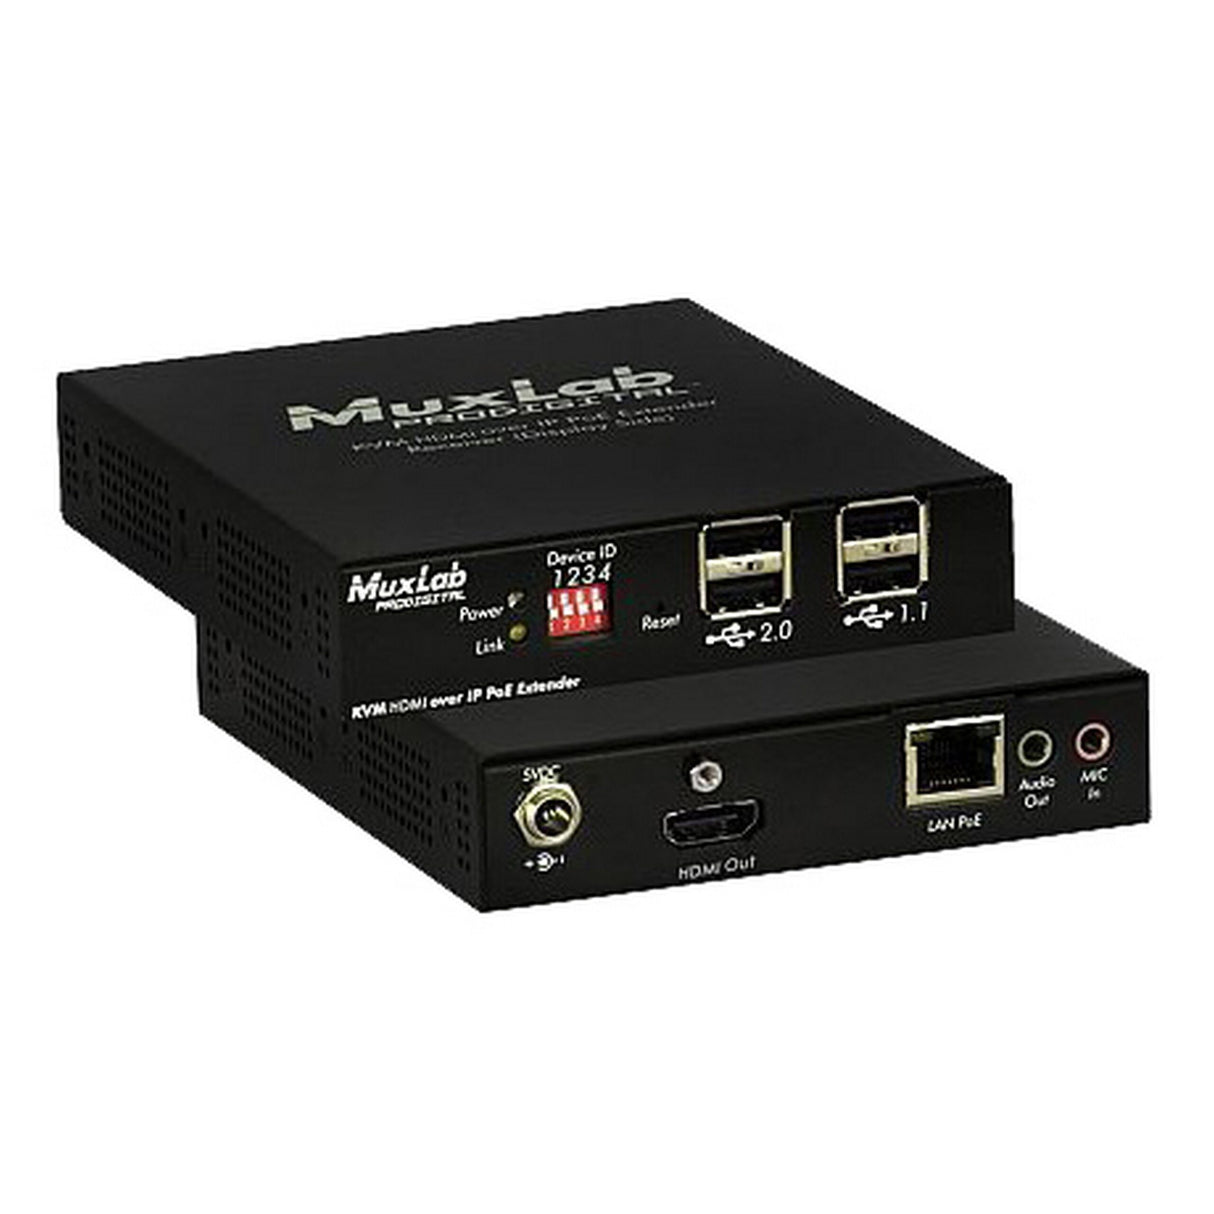 MuxLab 500770-RX KVM HDMI Over IP PoE Extender Kit Receiver